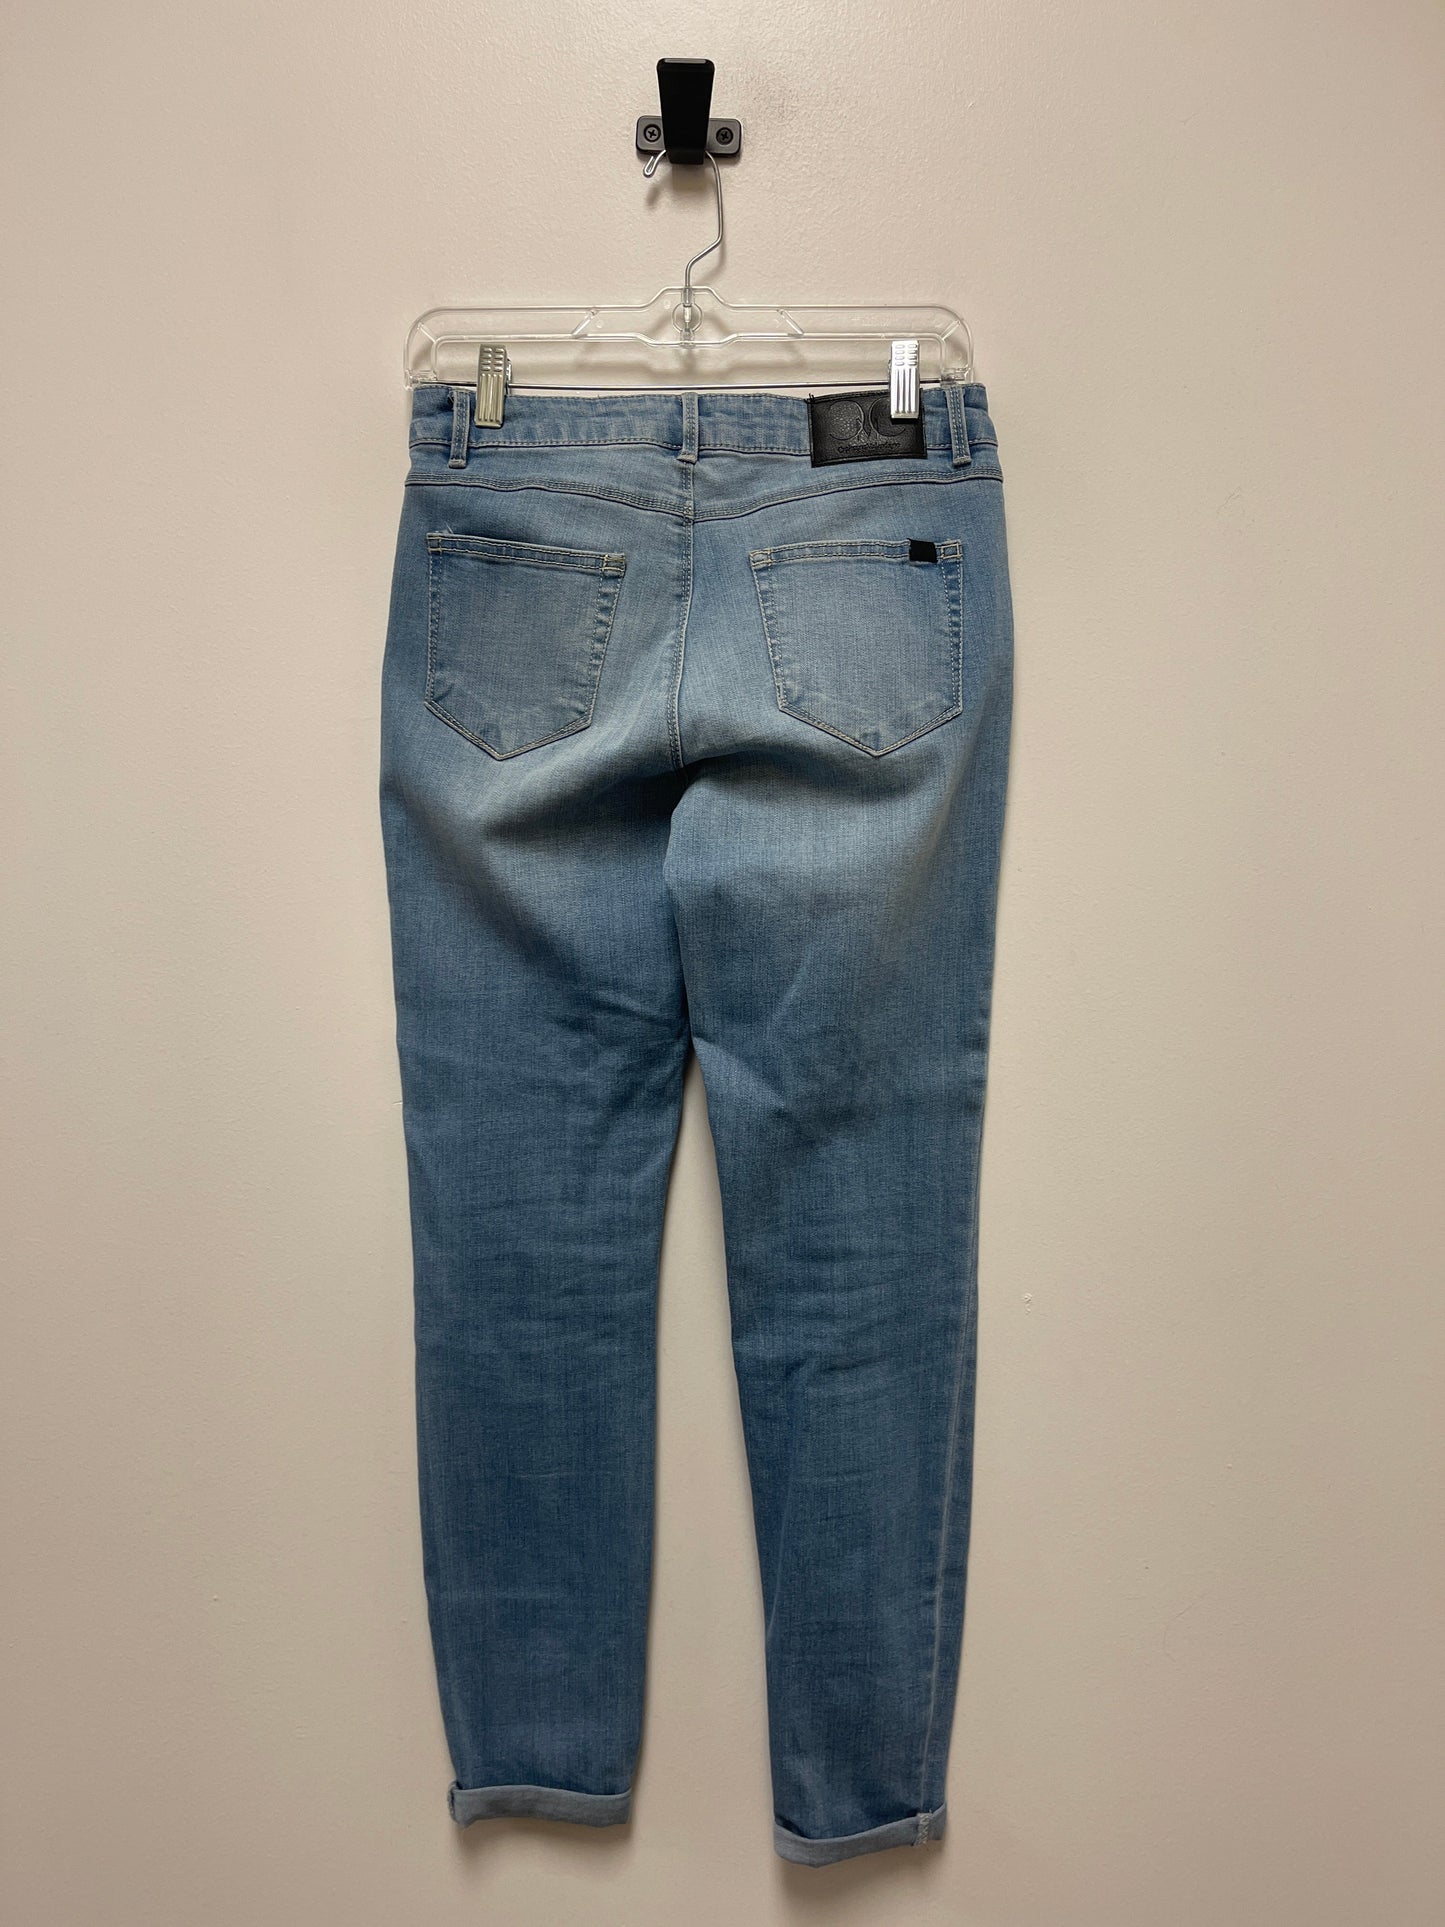 Jeans Skinny By Catherine Malandrino  Size: 4